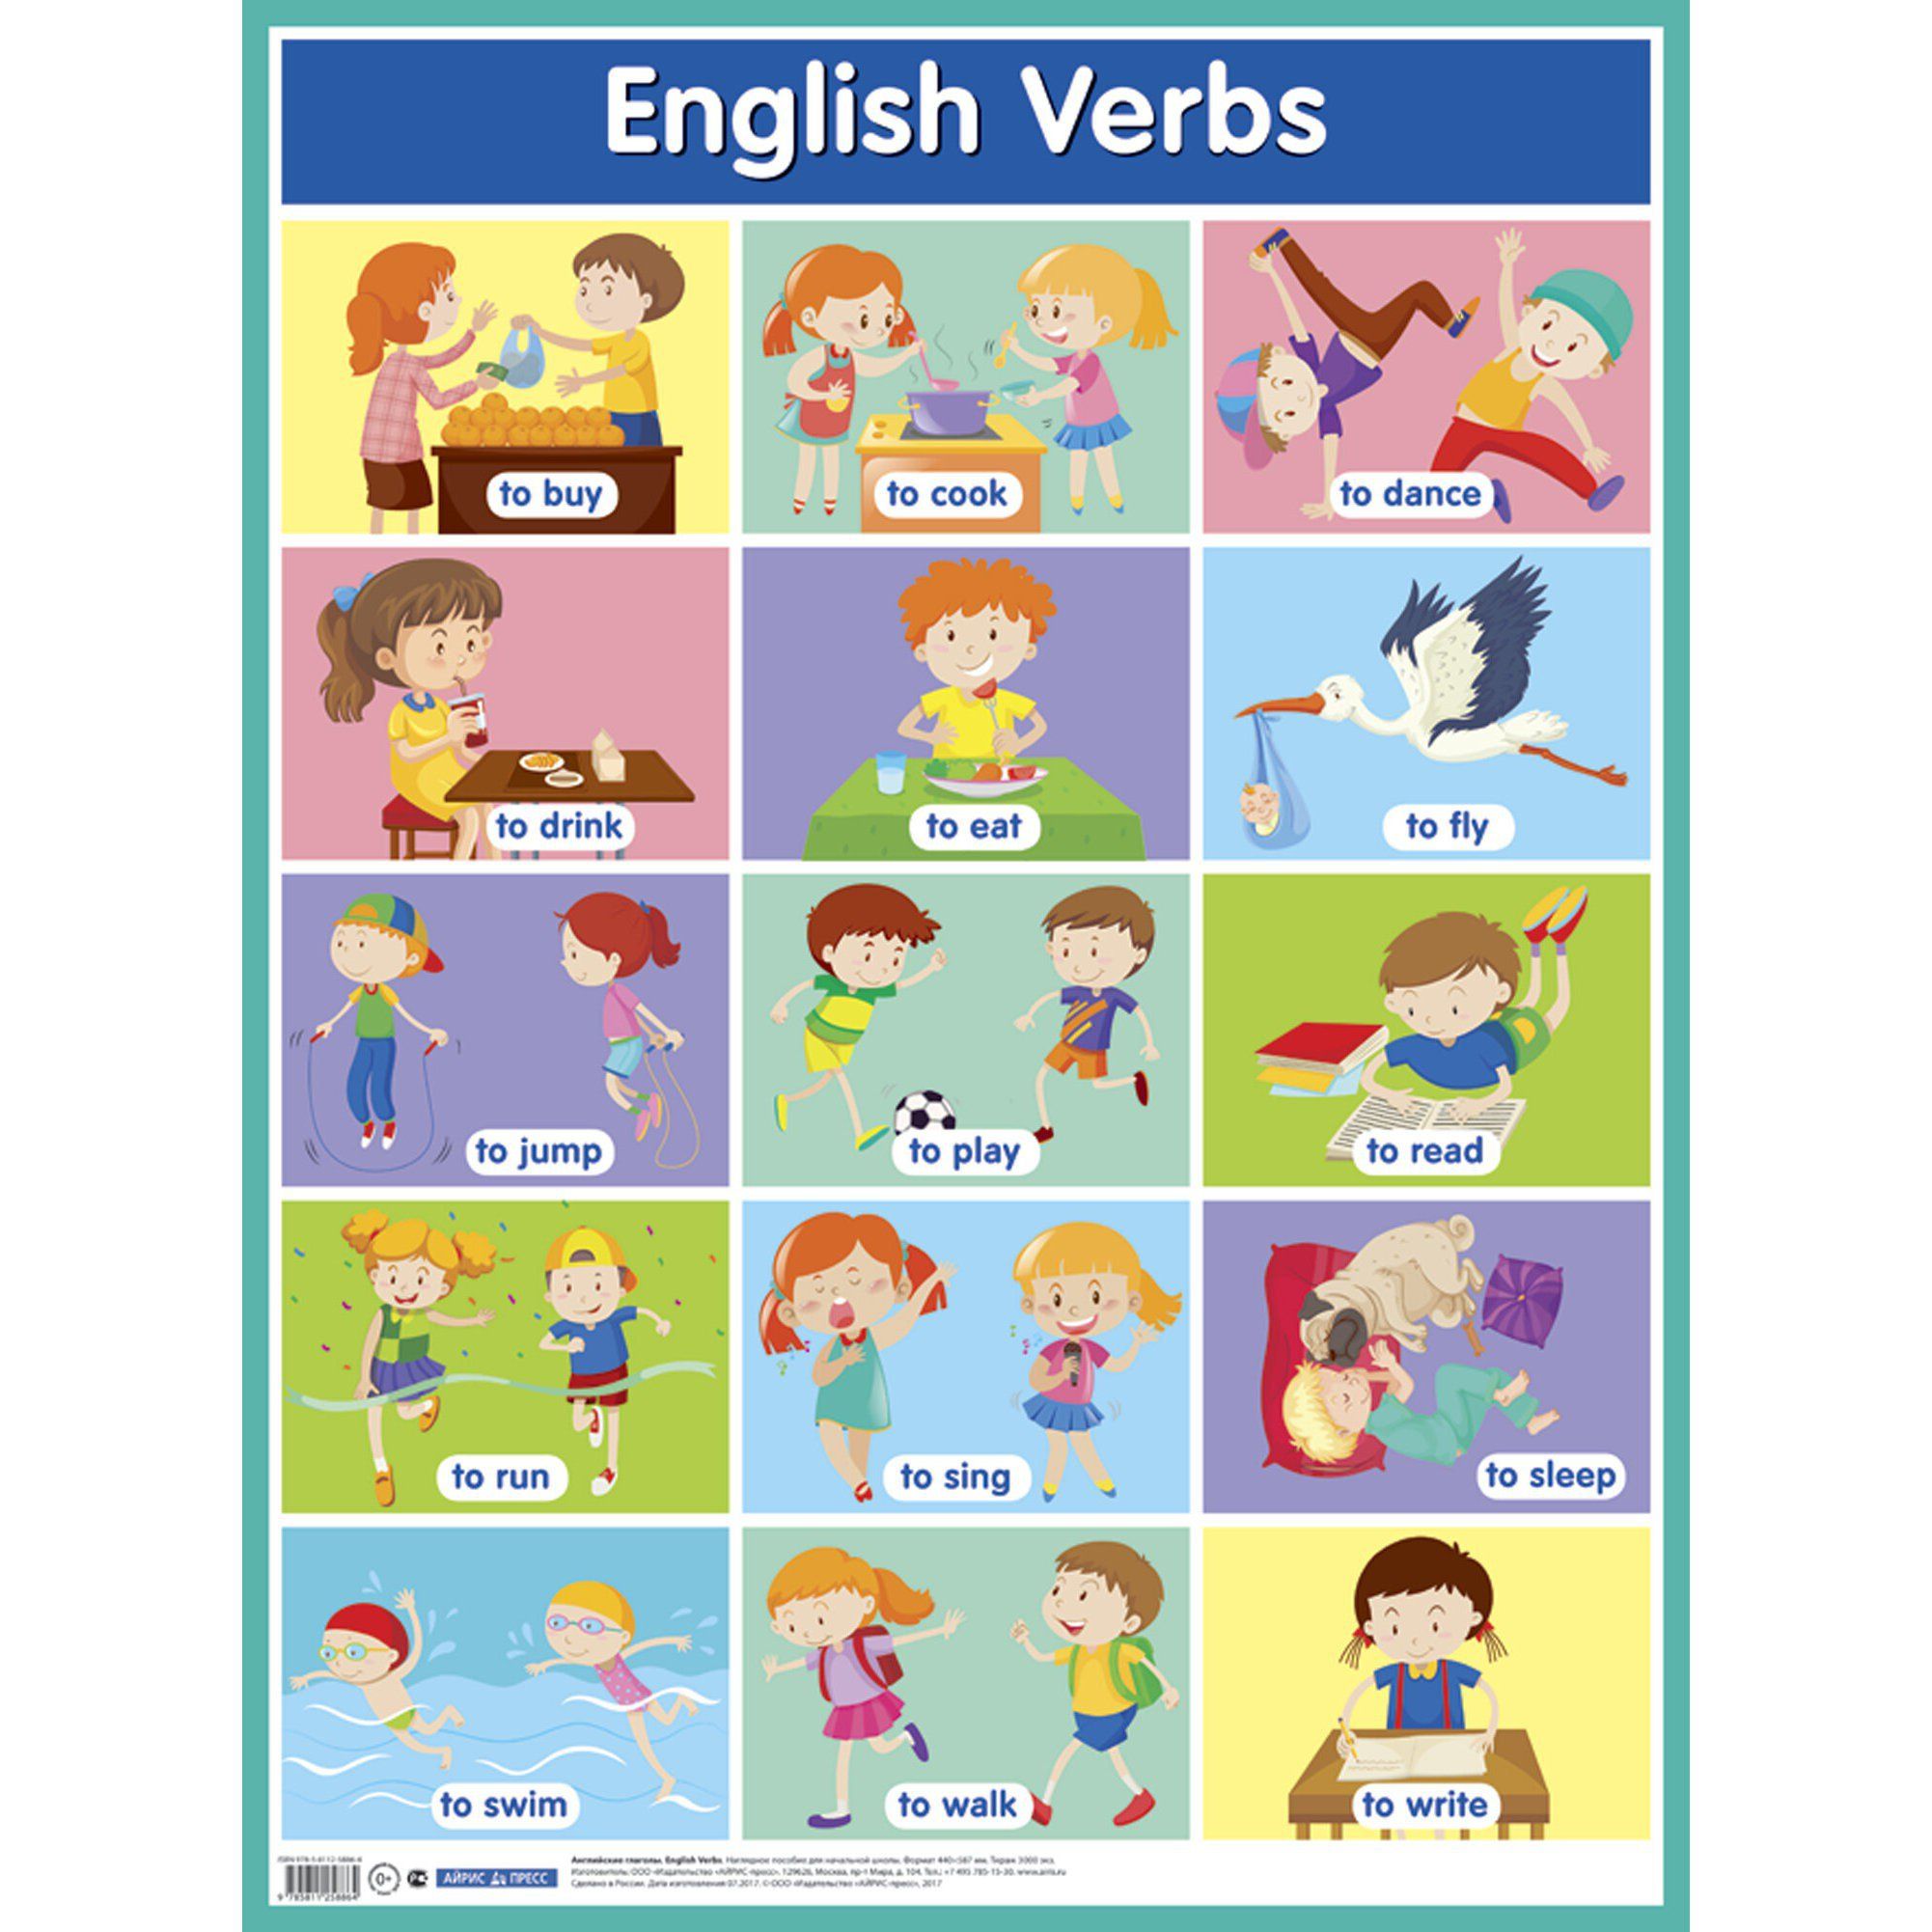 Английские глаголы помогать. Глаголы на английском для детей. Глаголы в английском языке для детей. Английские глаголы в картинках. Английские глаголы для дошкольников.